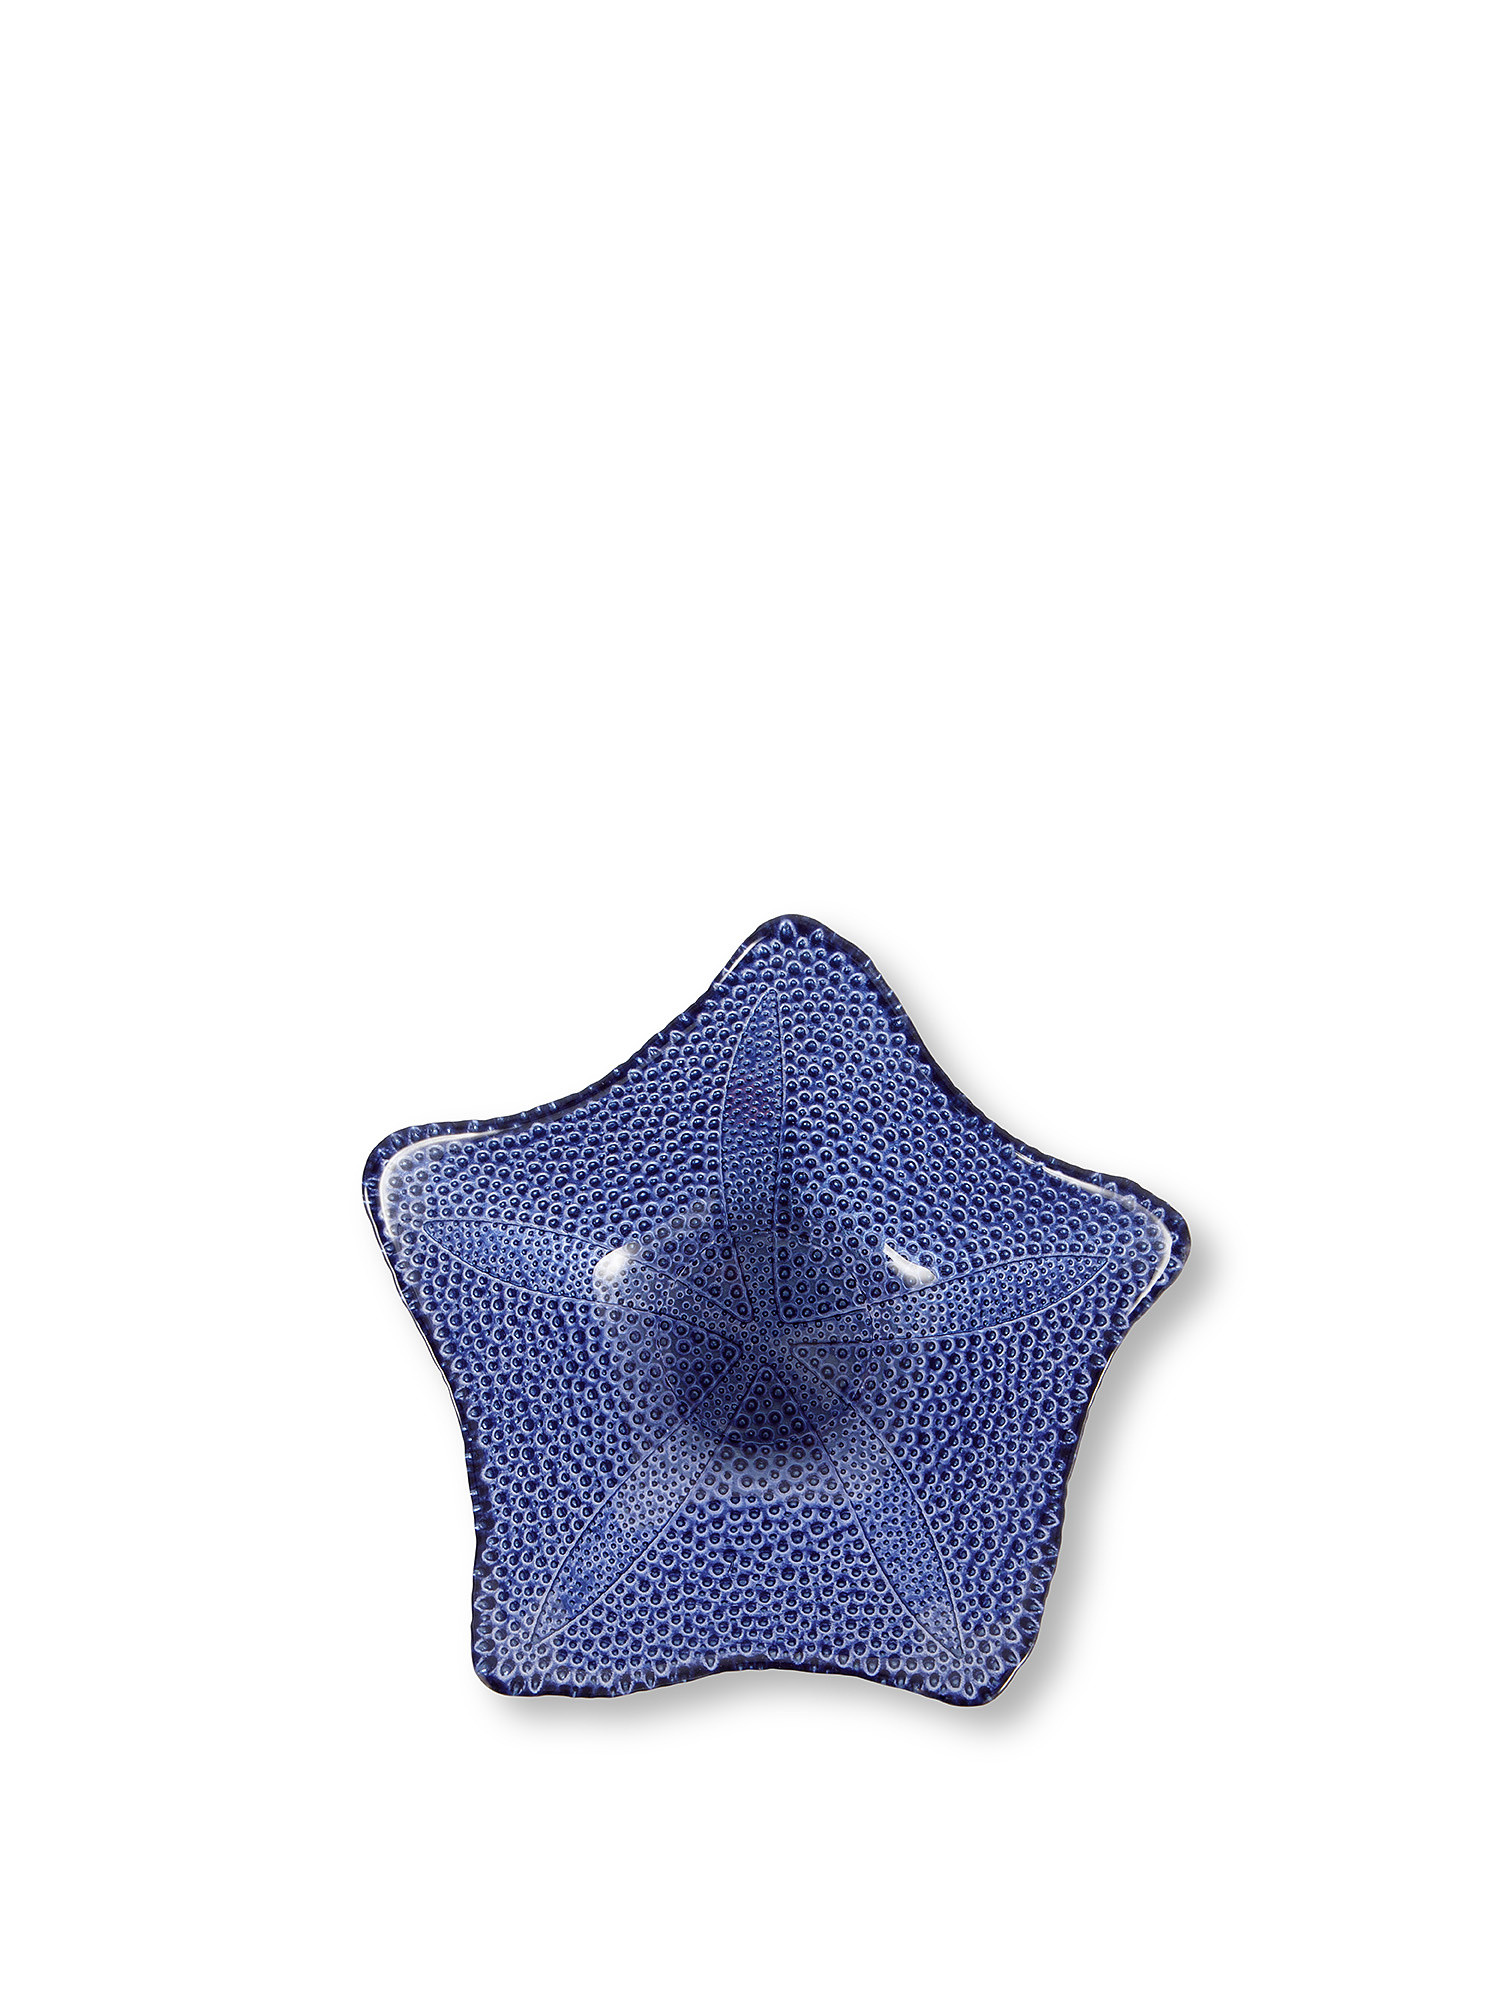 Coppetta vetro a stella marina, Blu, large image number 1